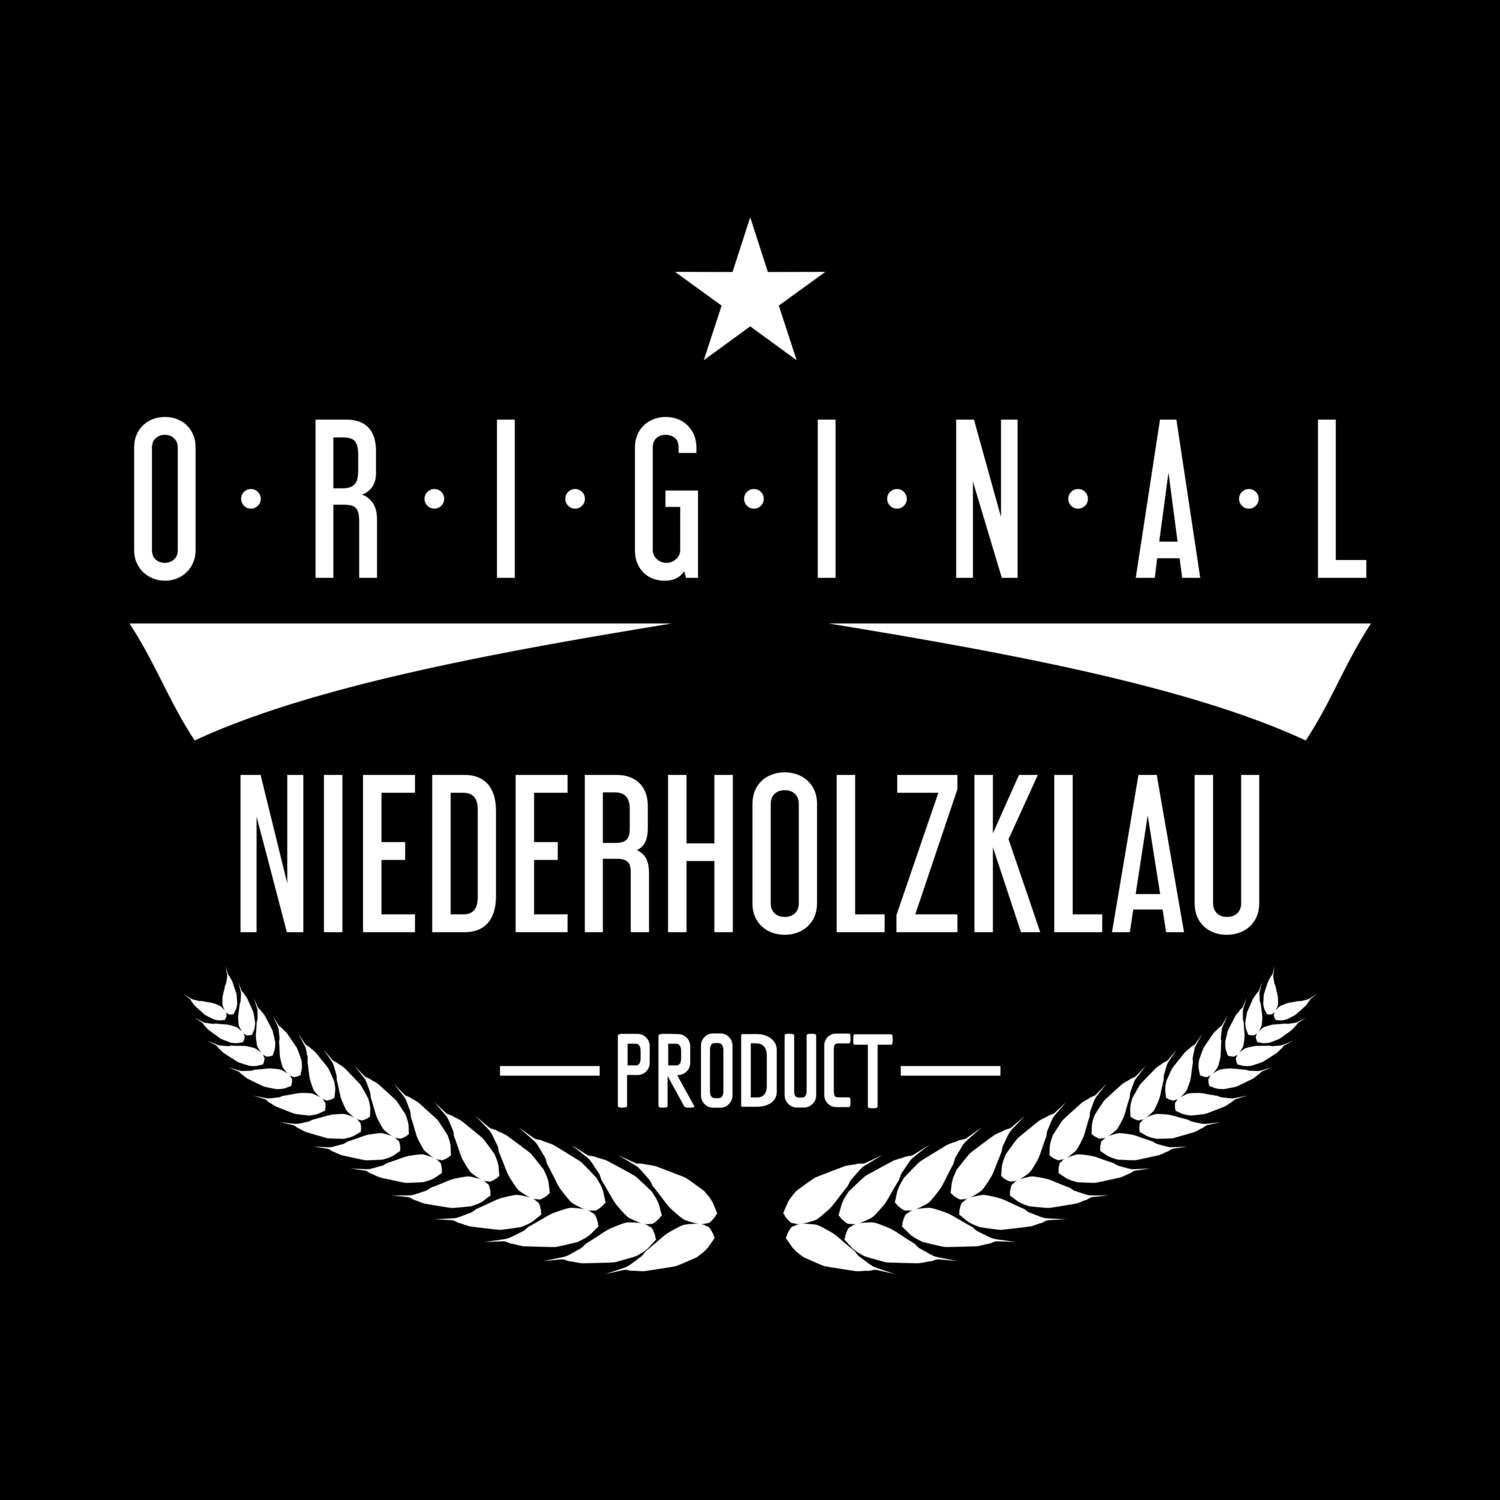 Niederholzklau T-Shirt »Original Product«